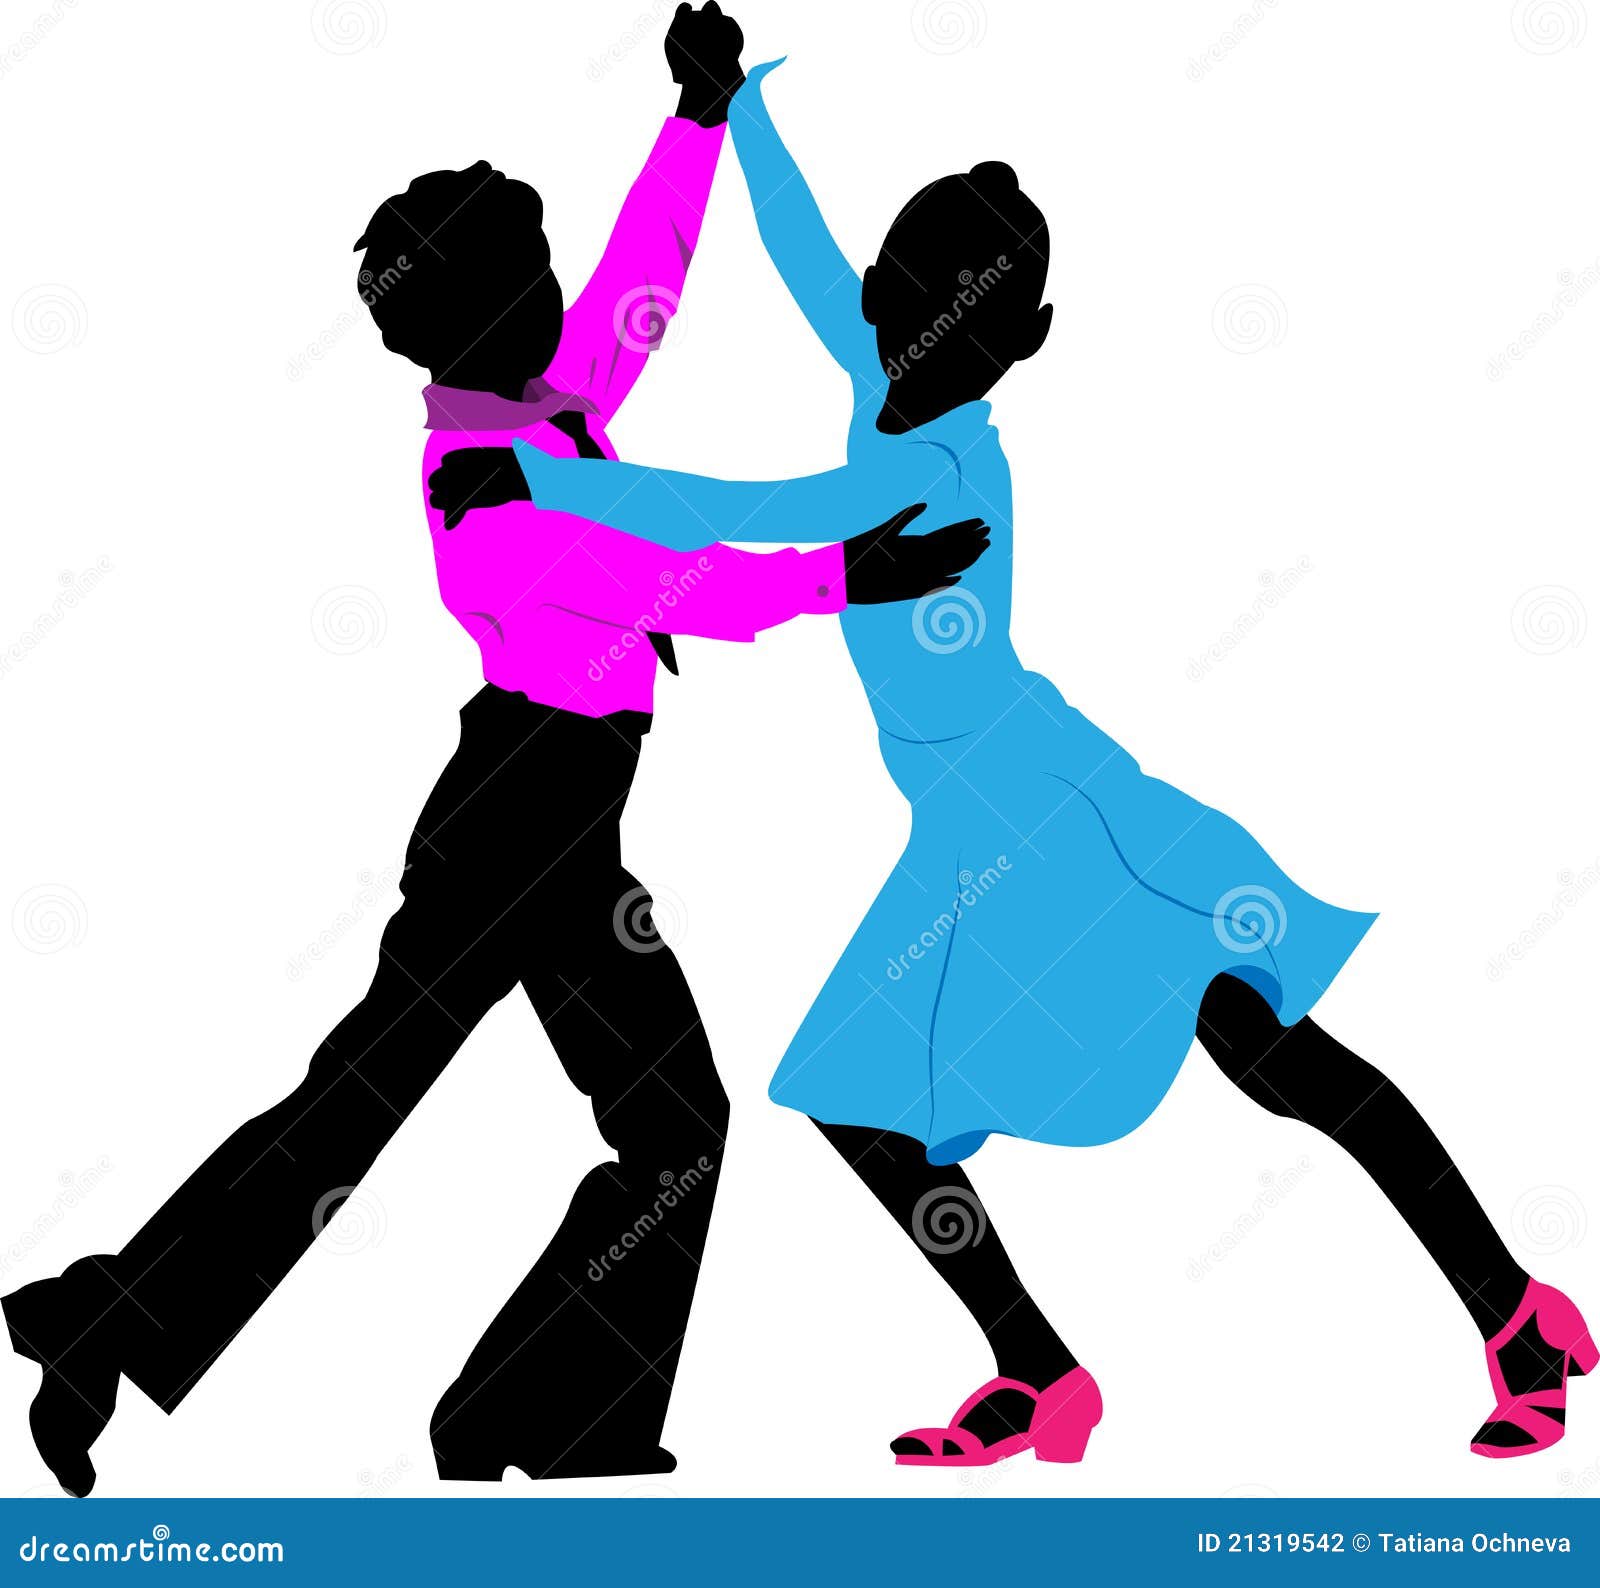 ballroom dance clipart silhouettes - photo #26